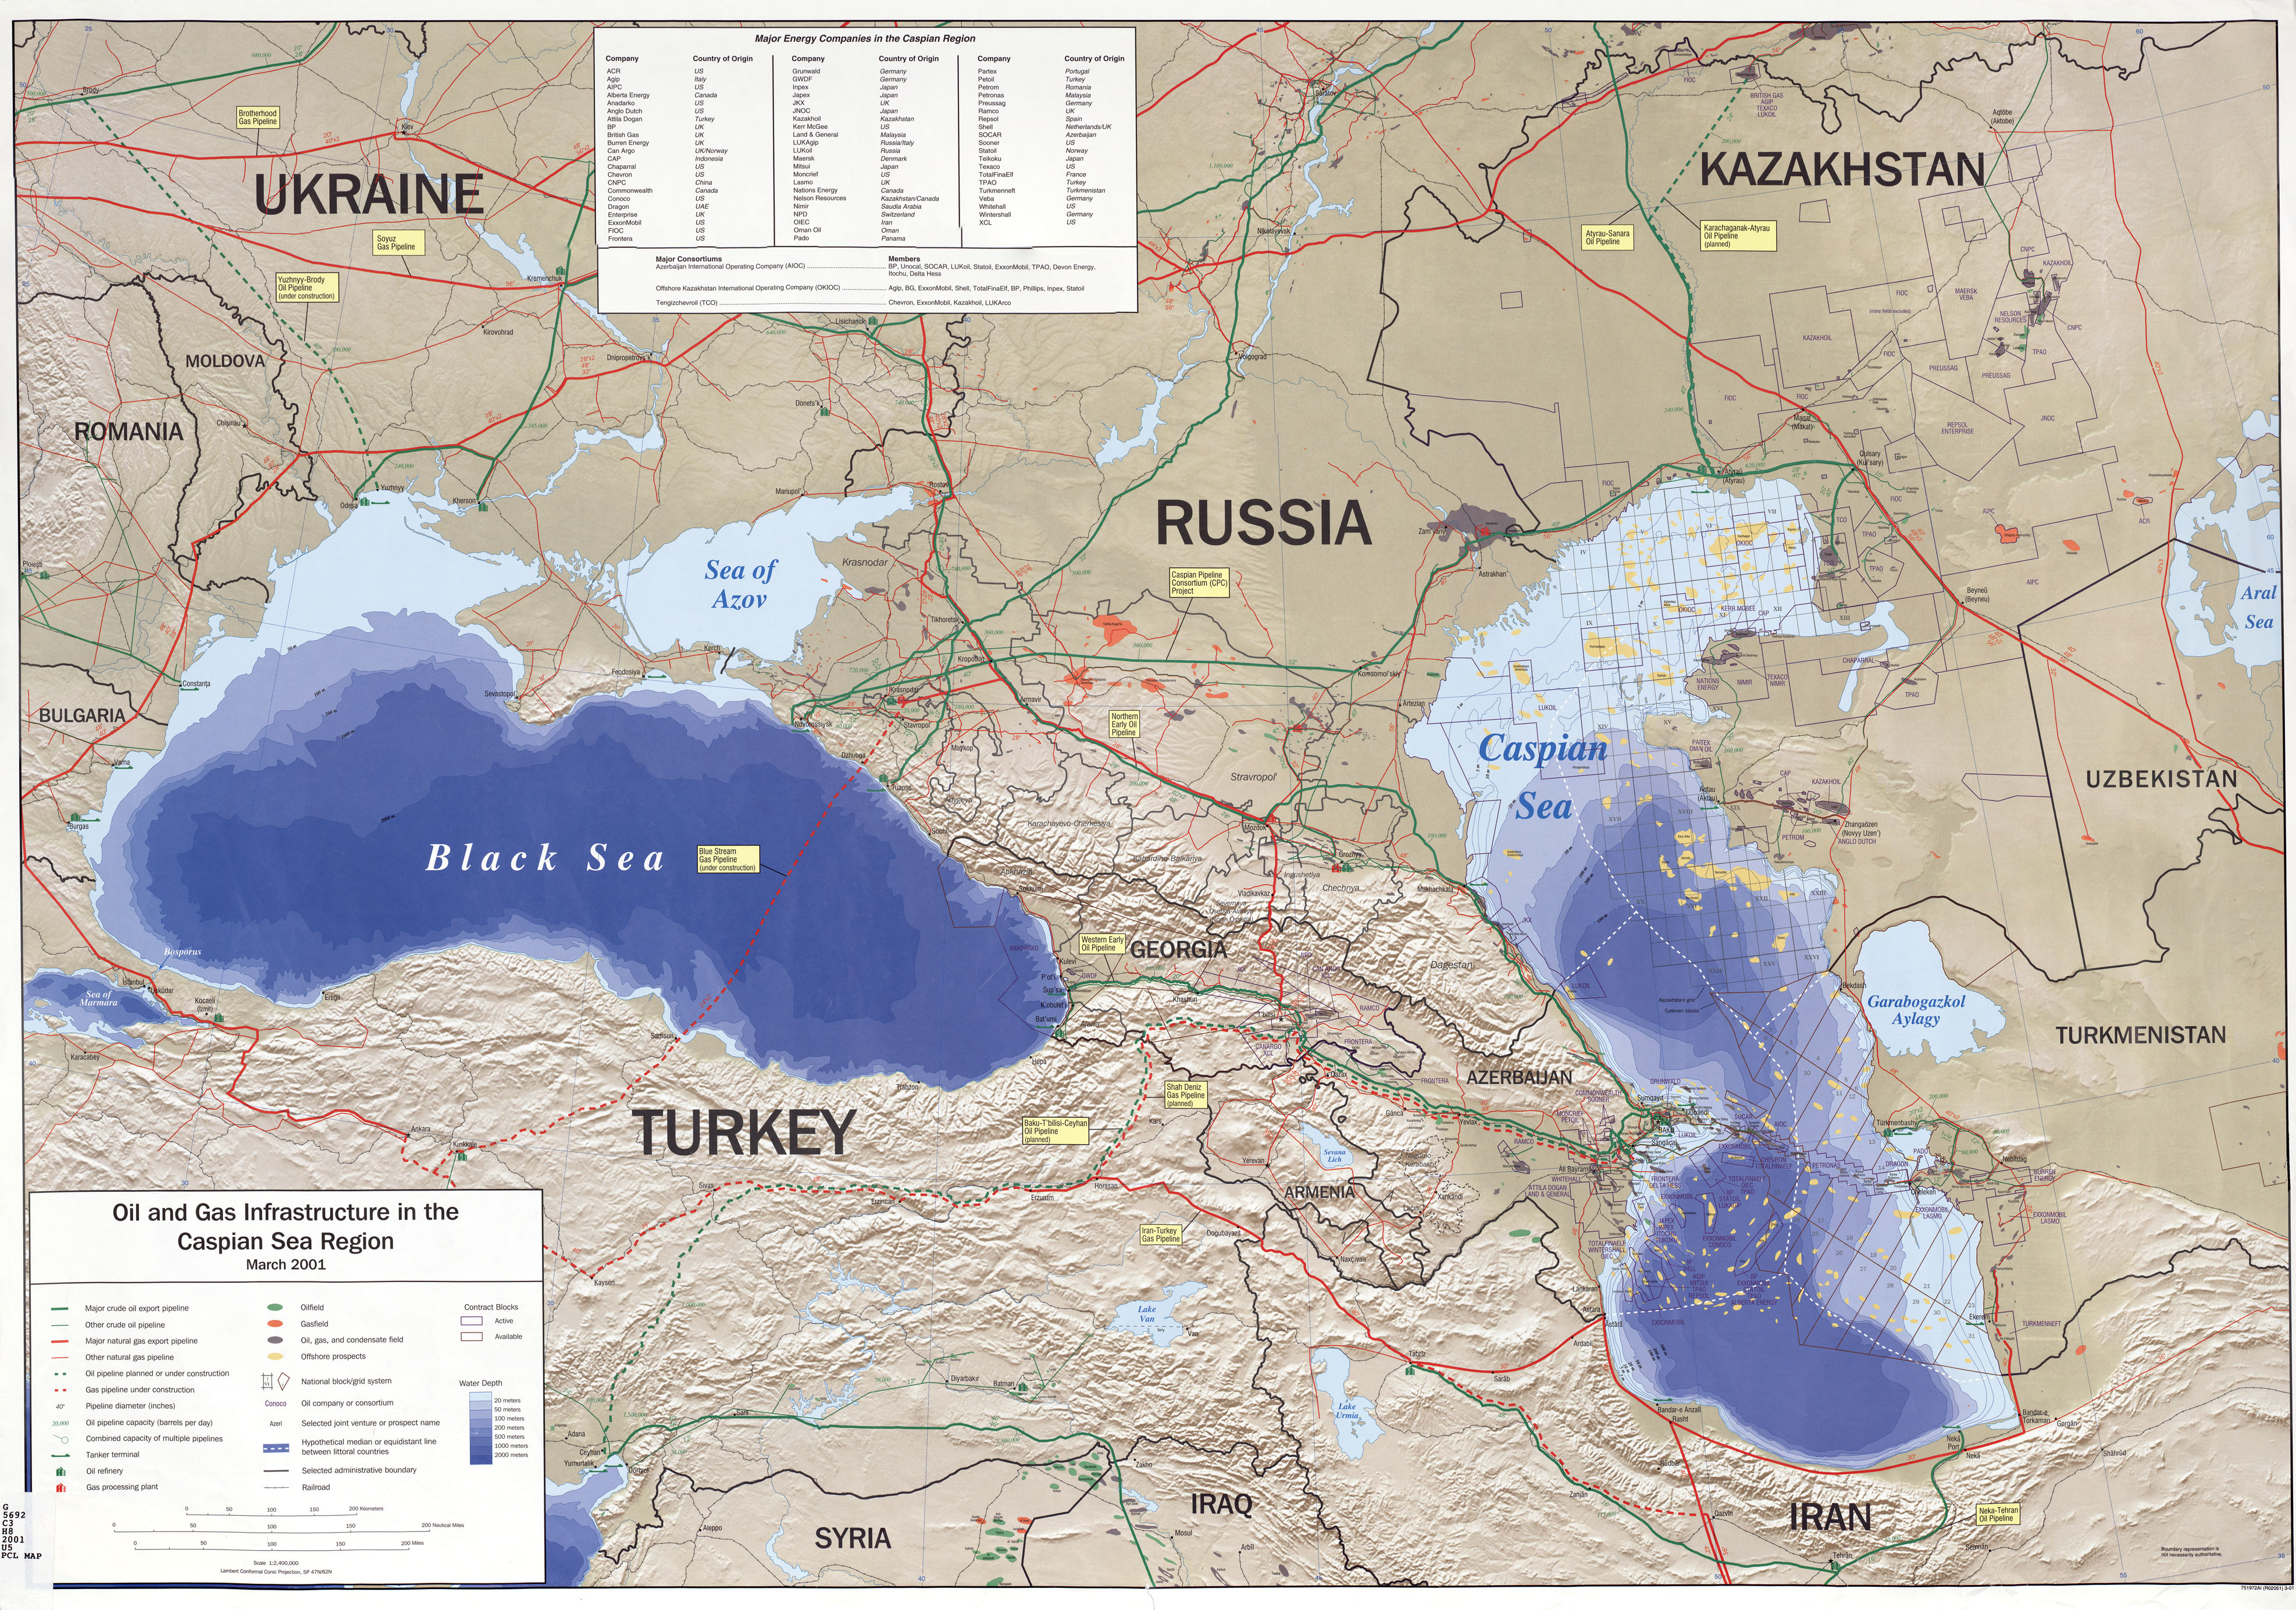 The Black and Caspian Sea region